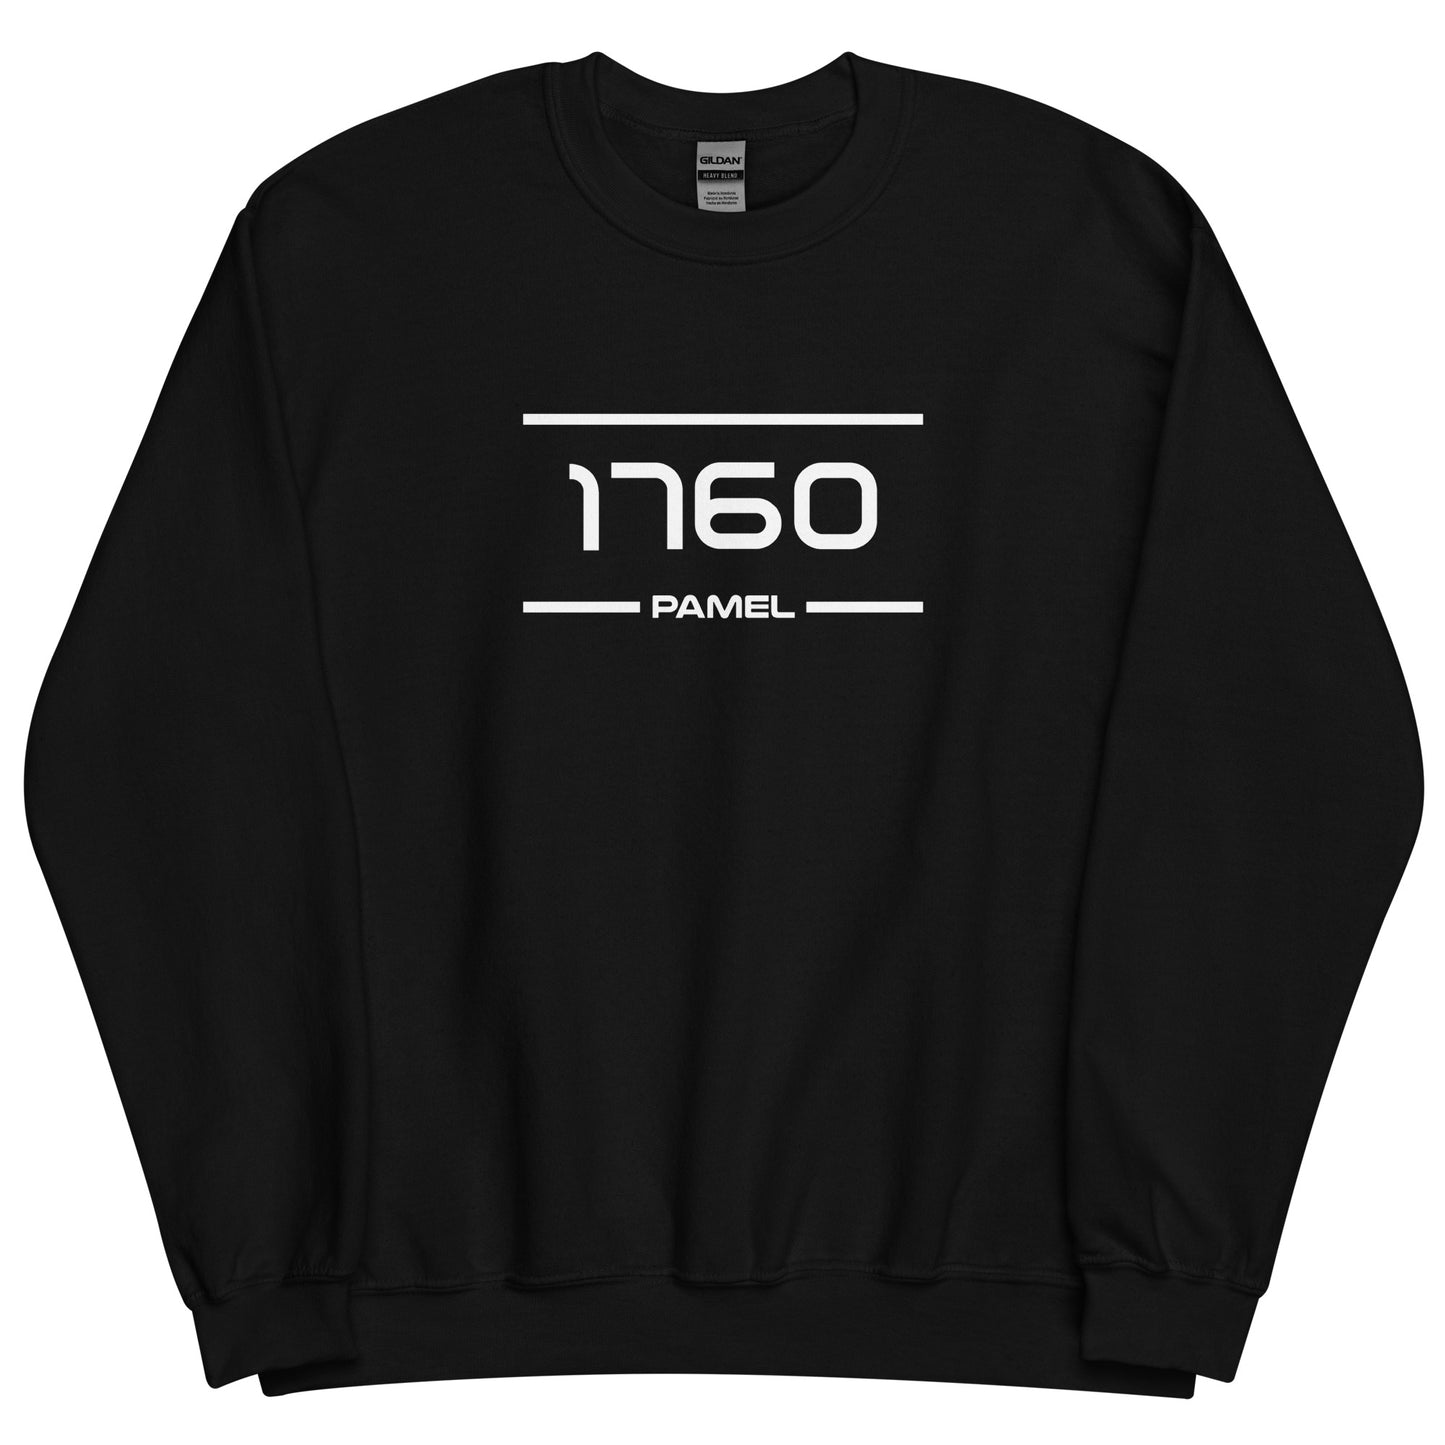 Sweater - 1760 - Pamel (M/V)